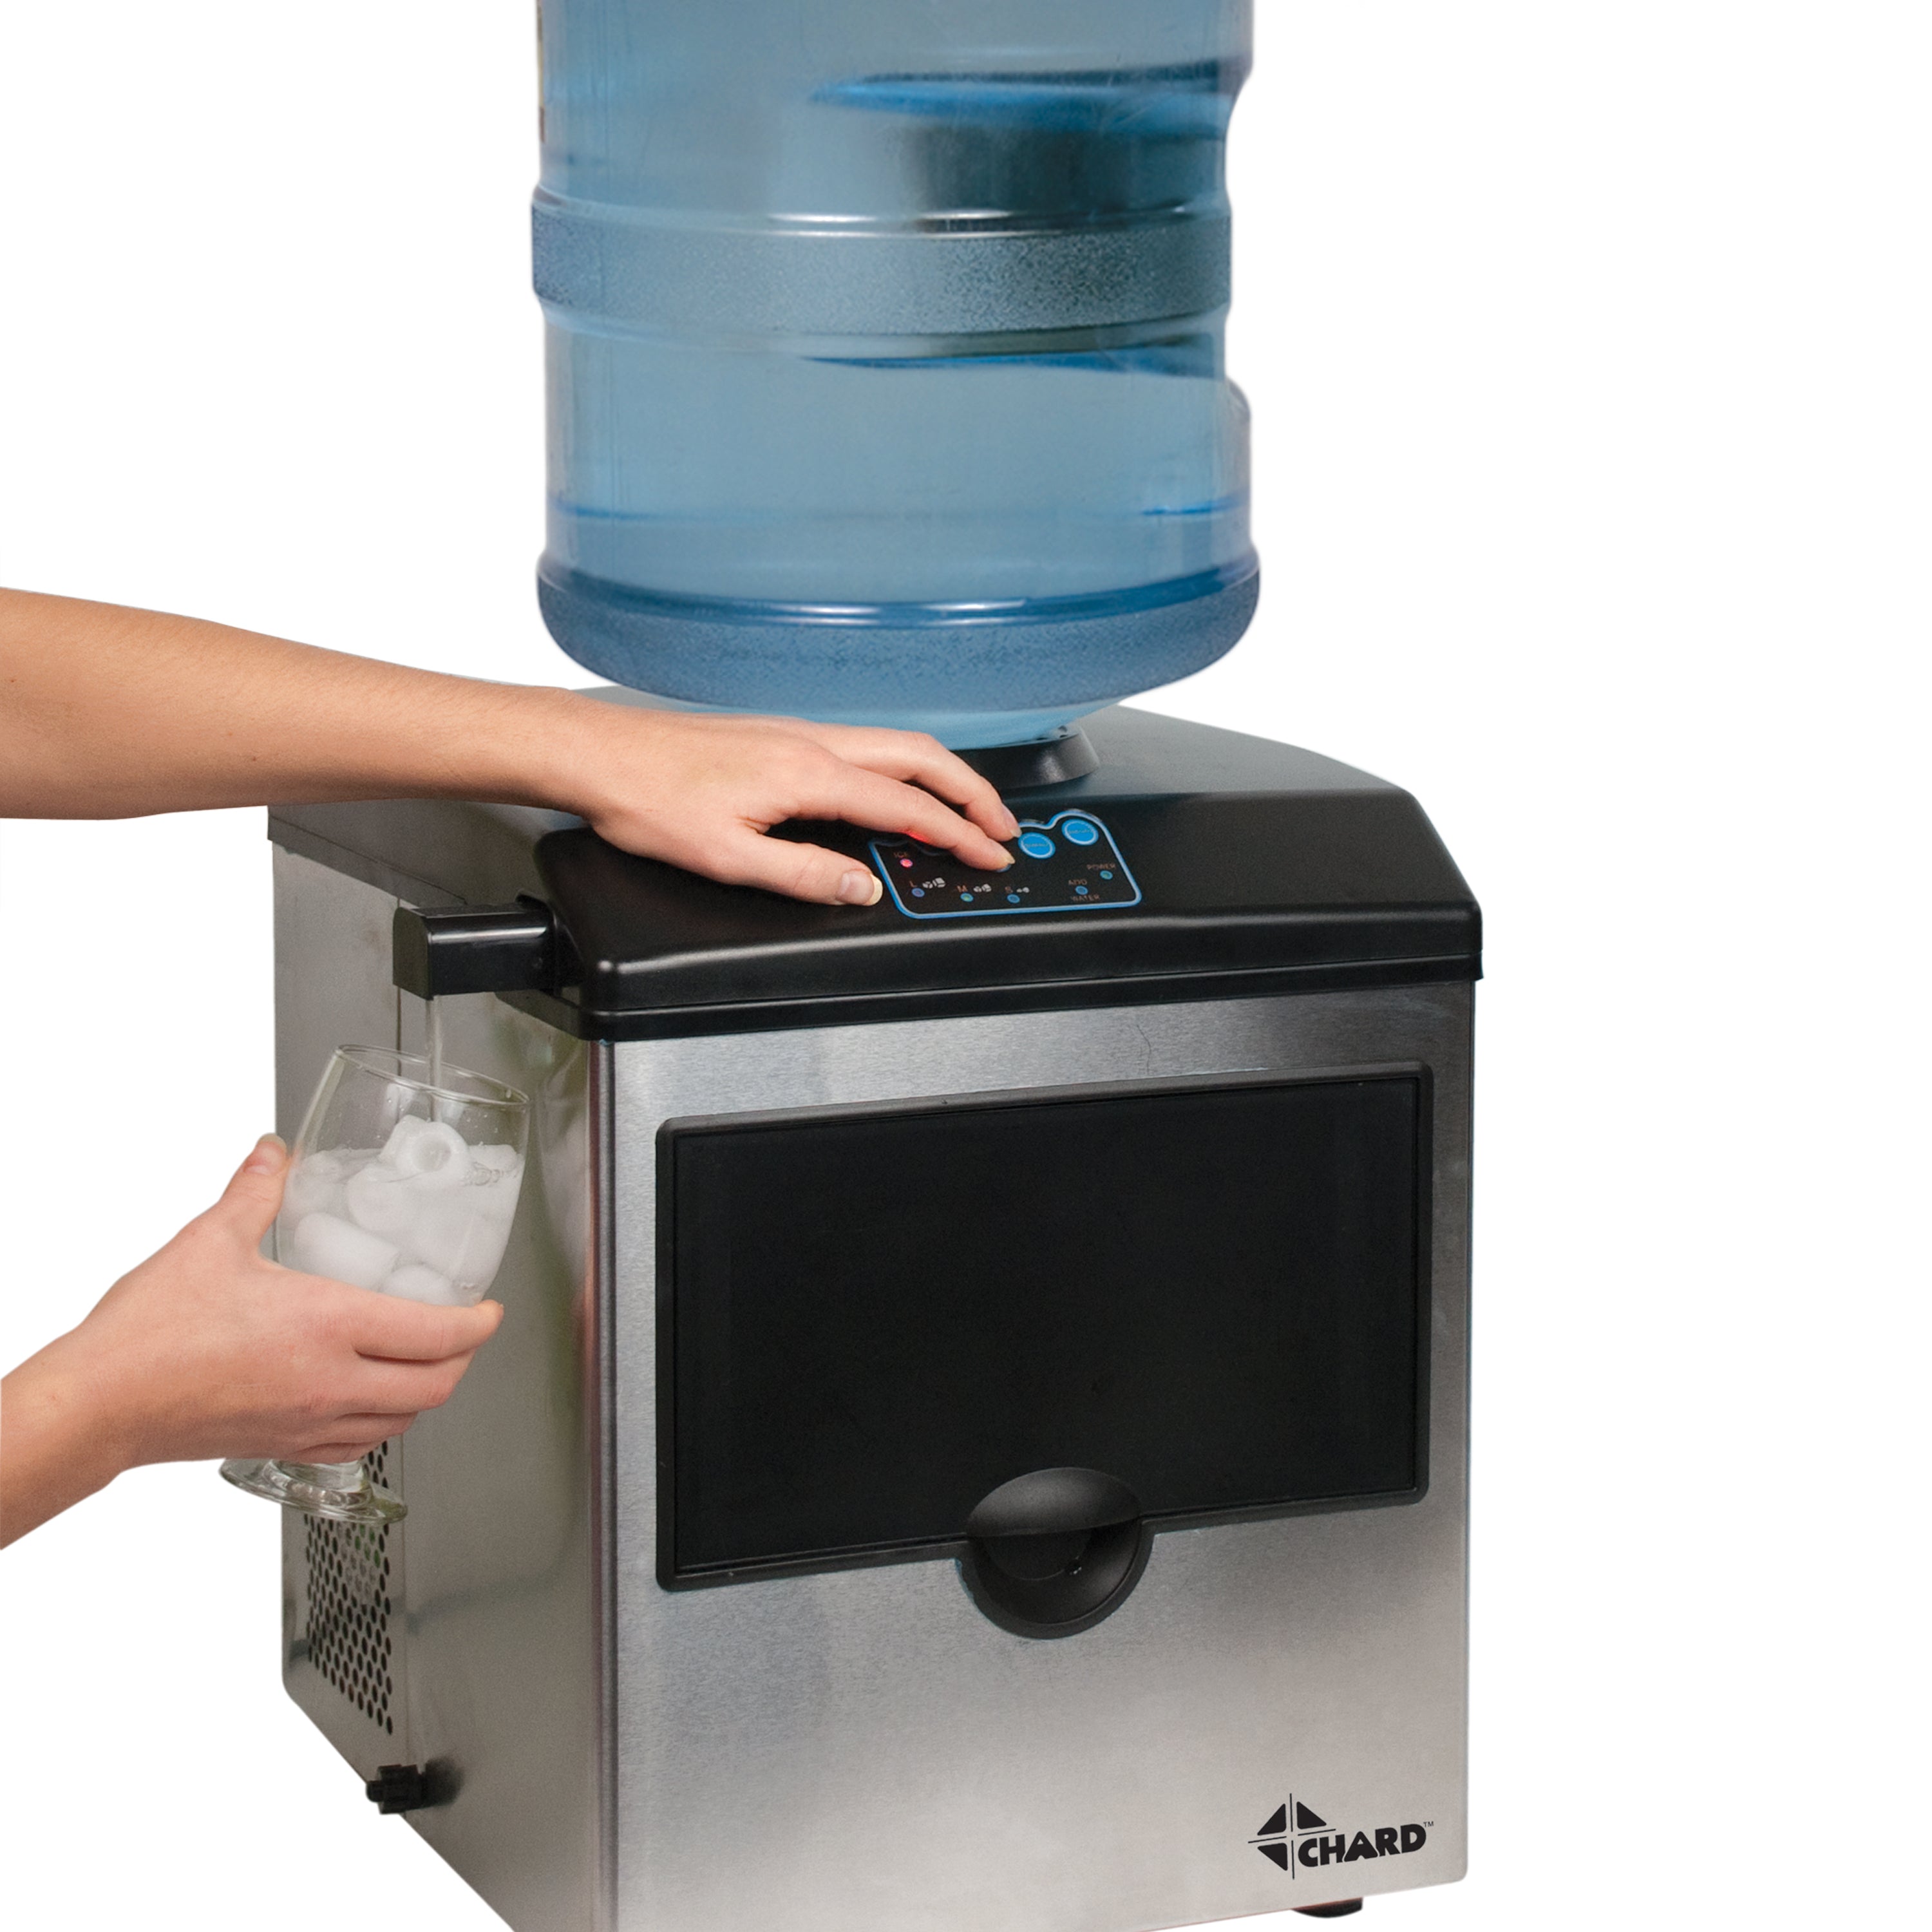 On Ice Plastic Drinks Dispenser 